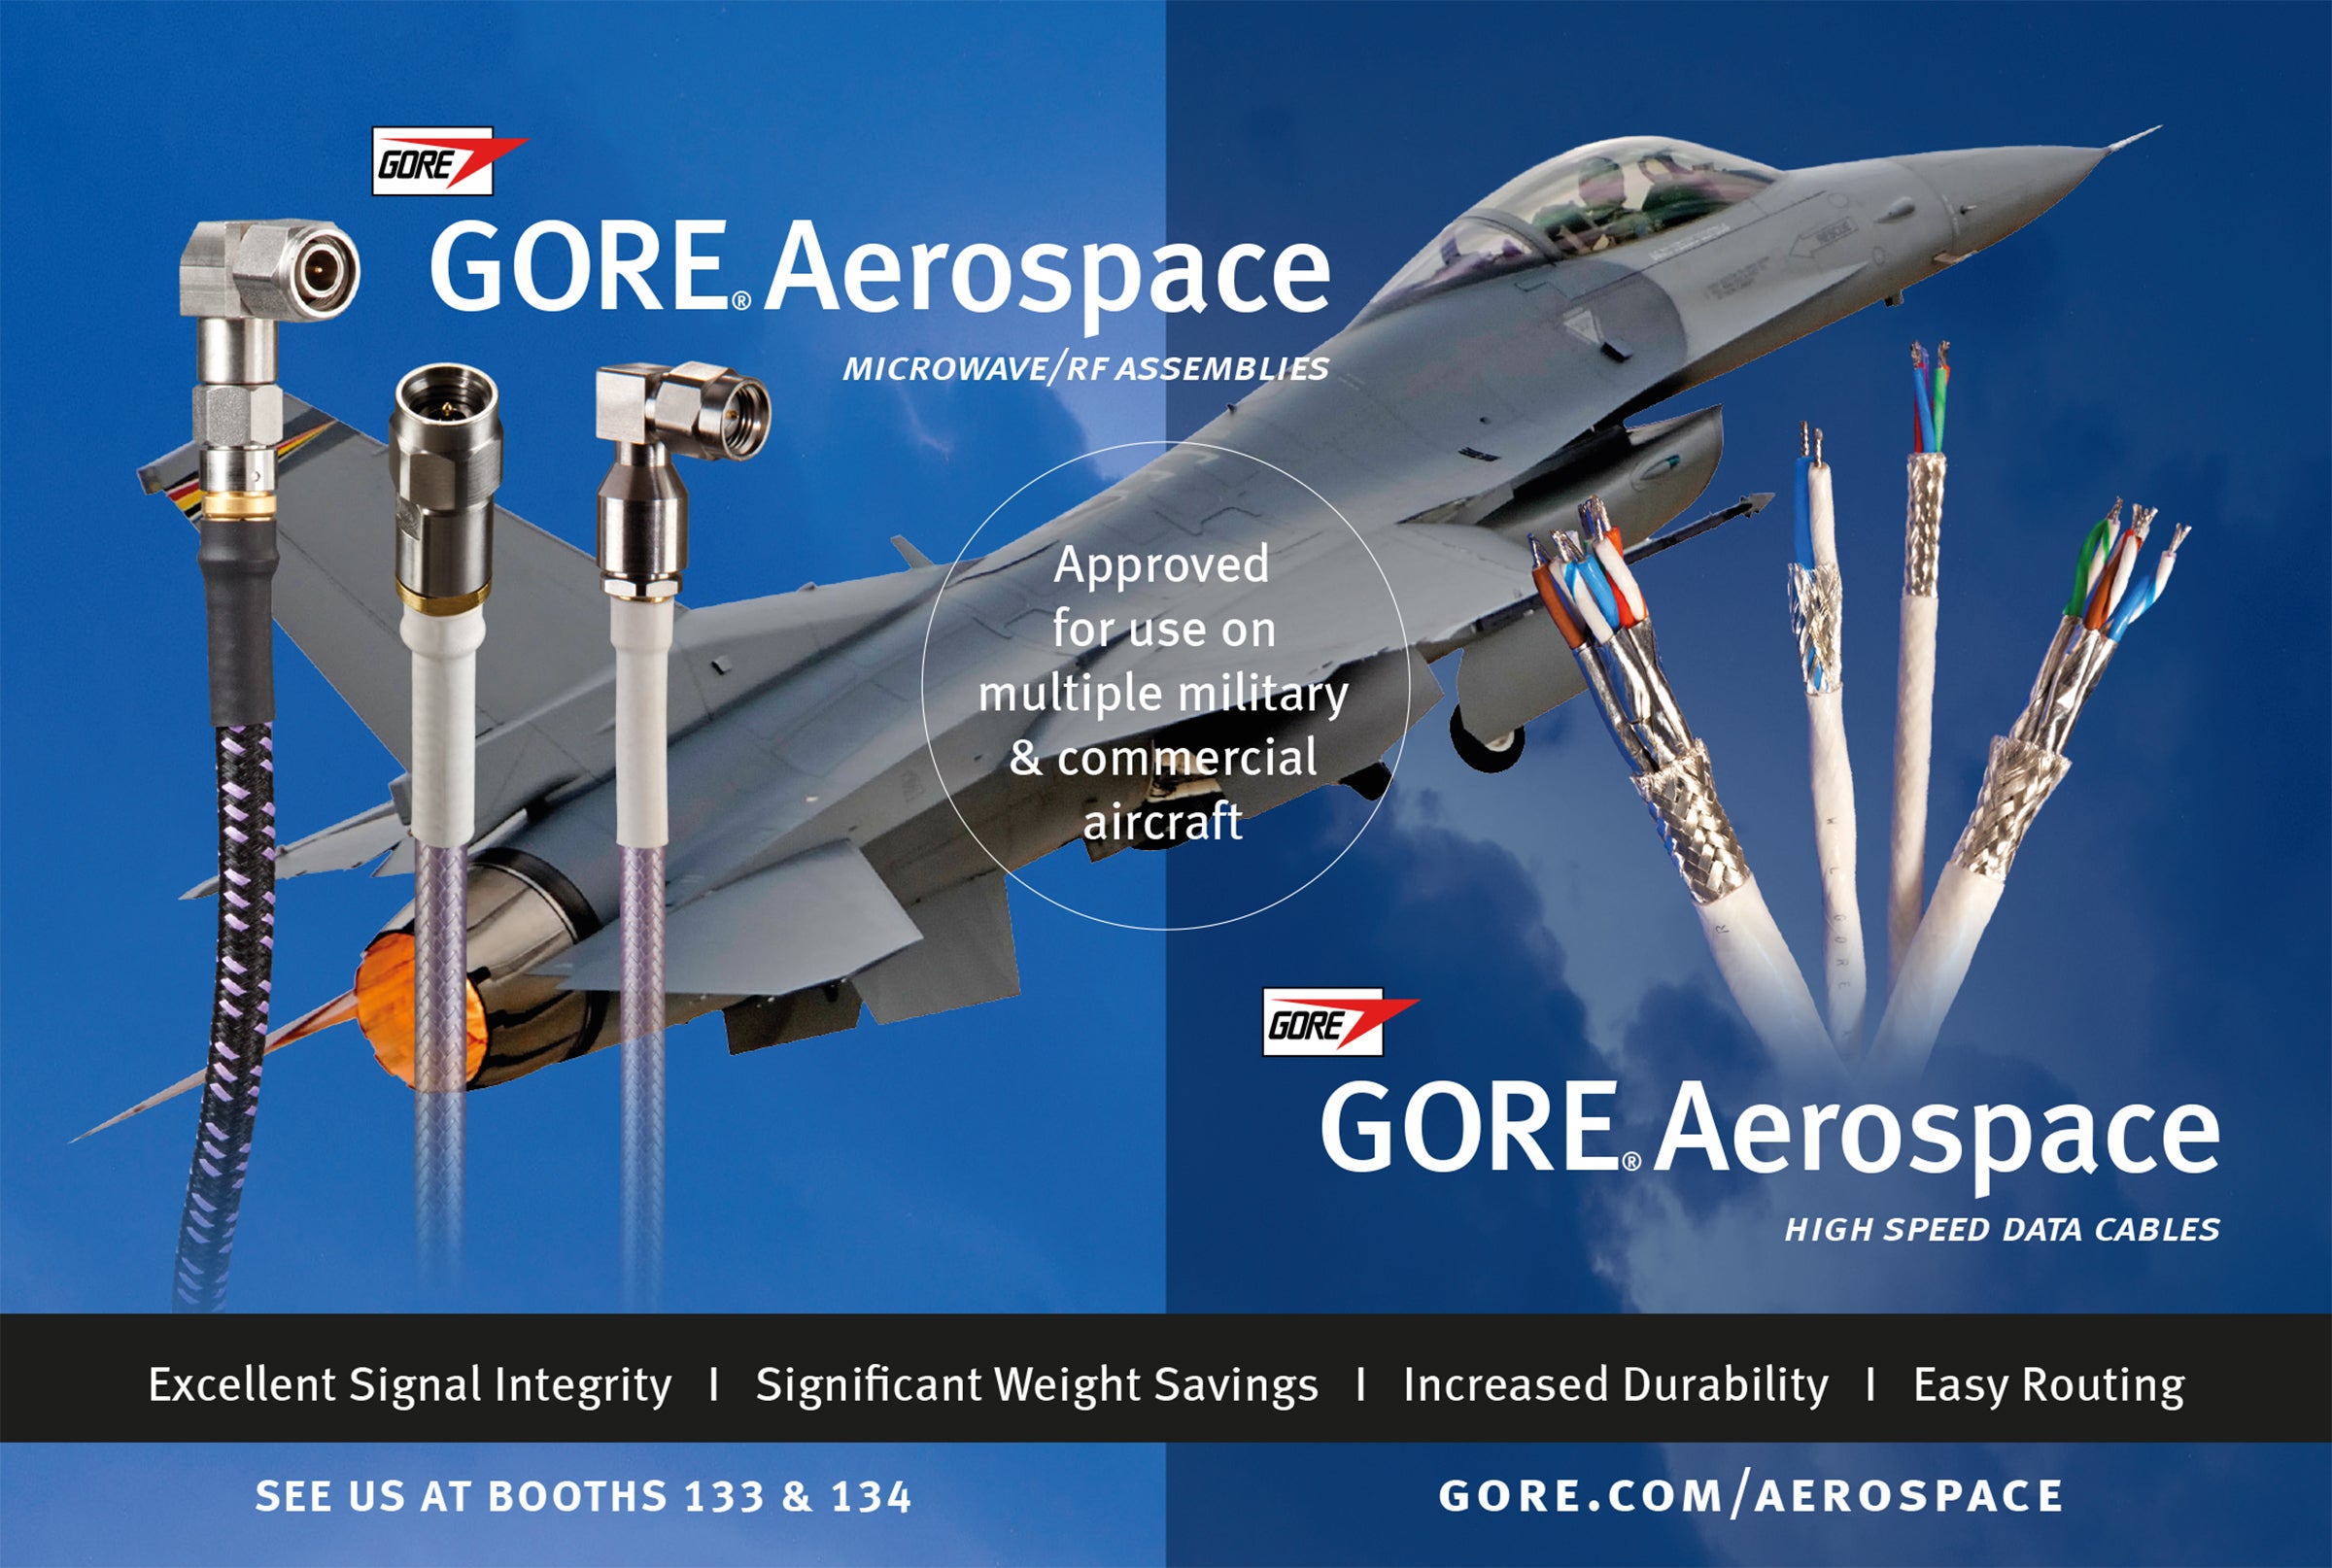 GORE Aerospace ad